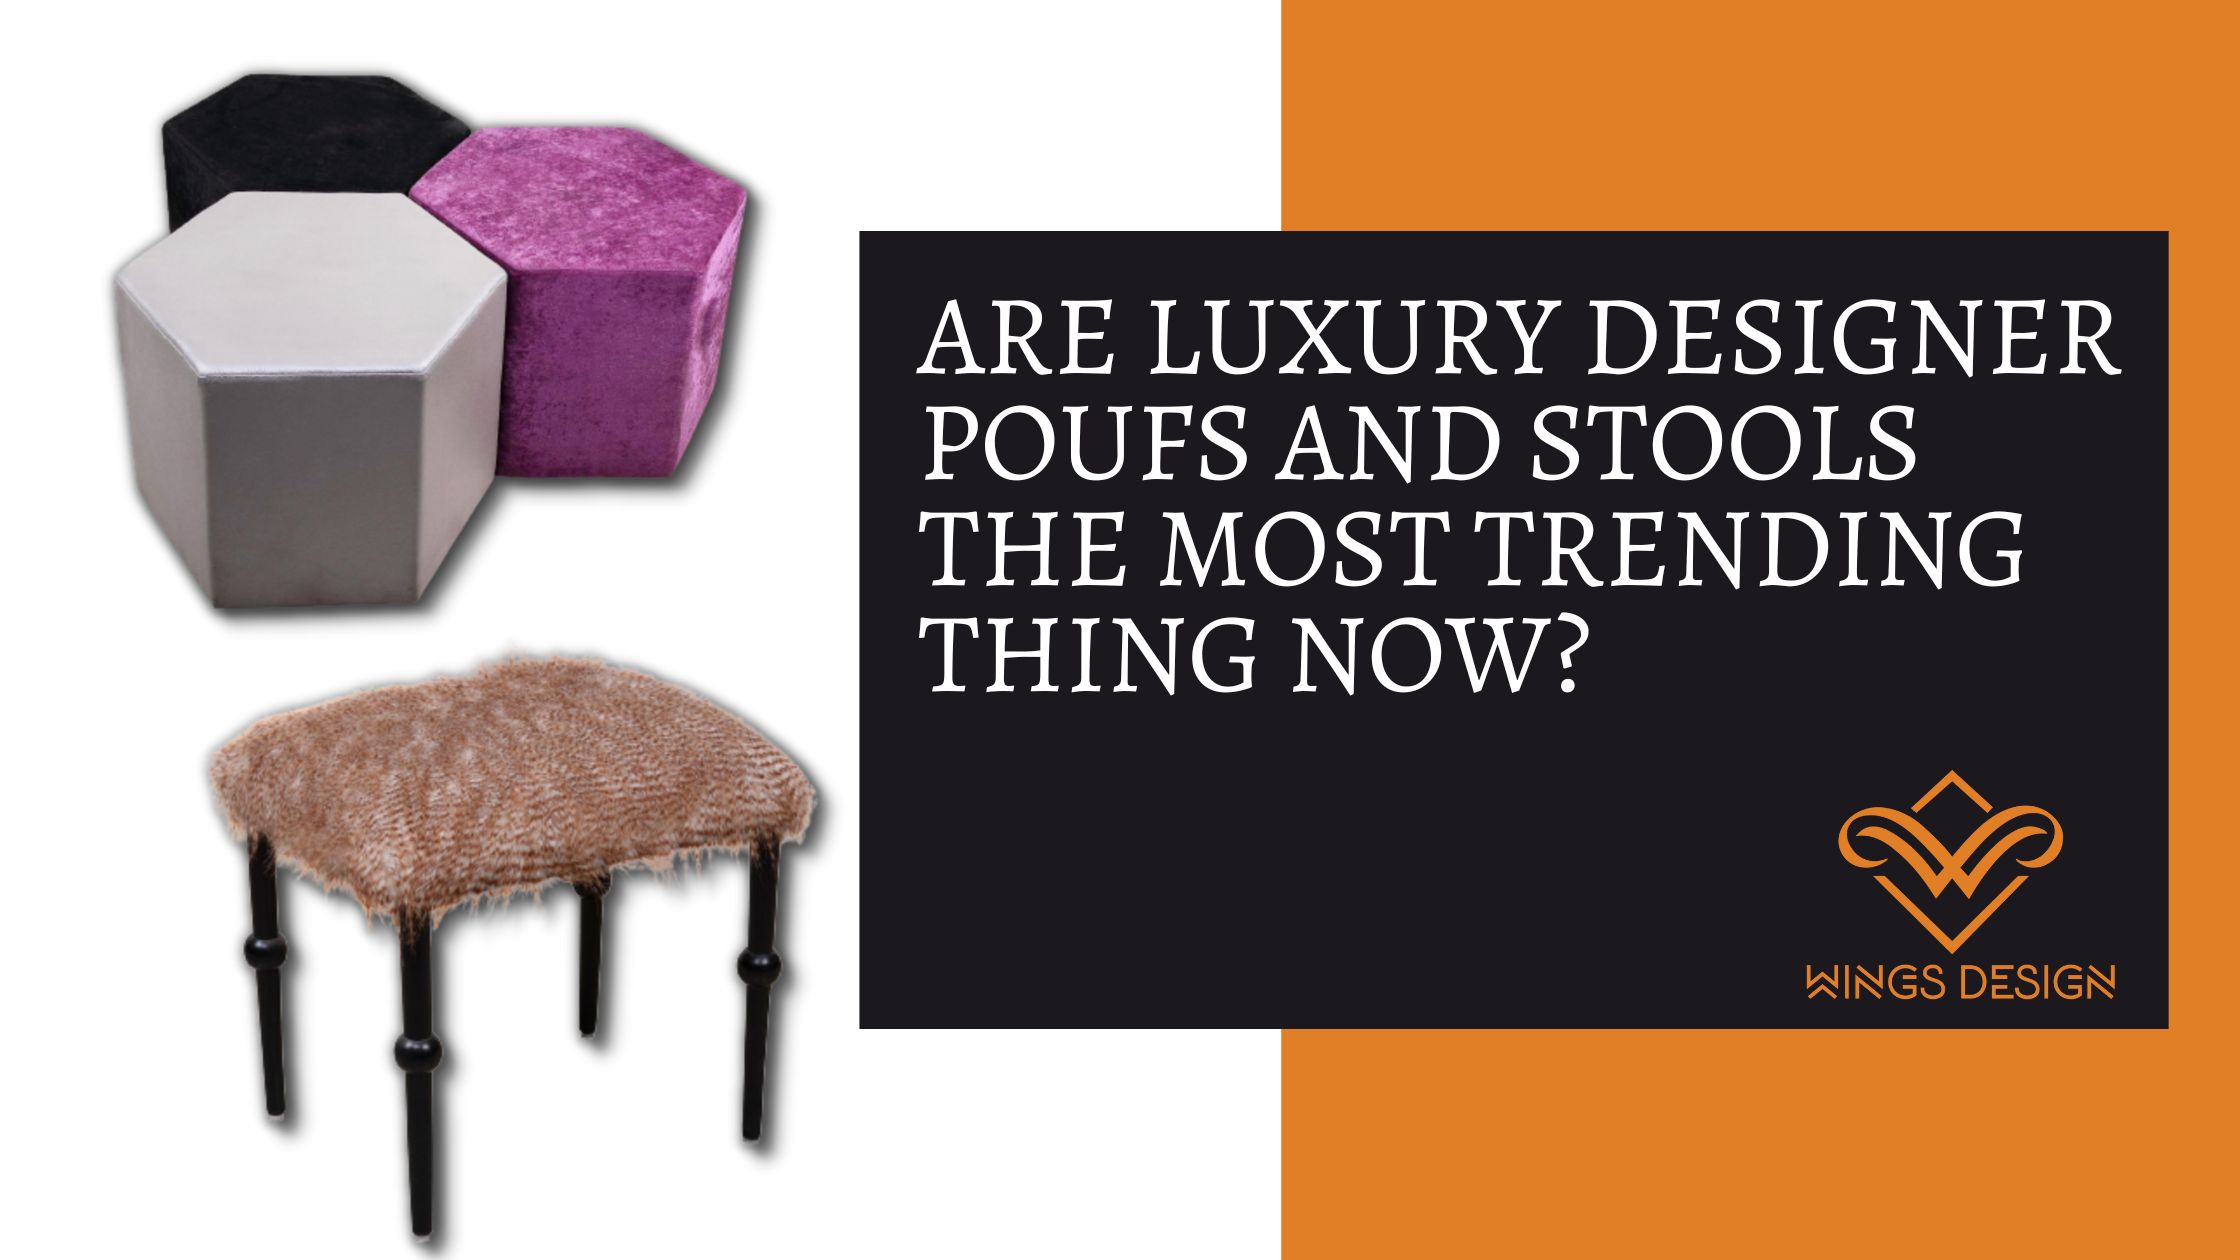 Luxury Designer Poufs And Stools